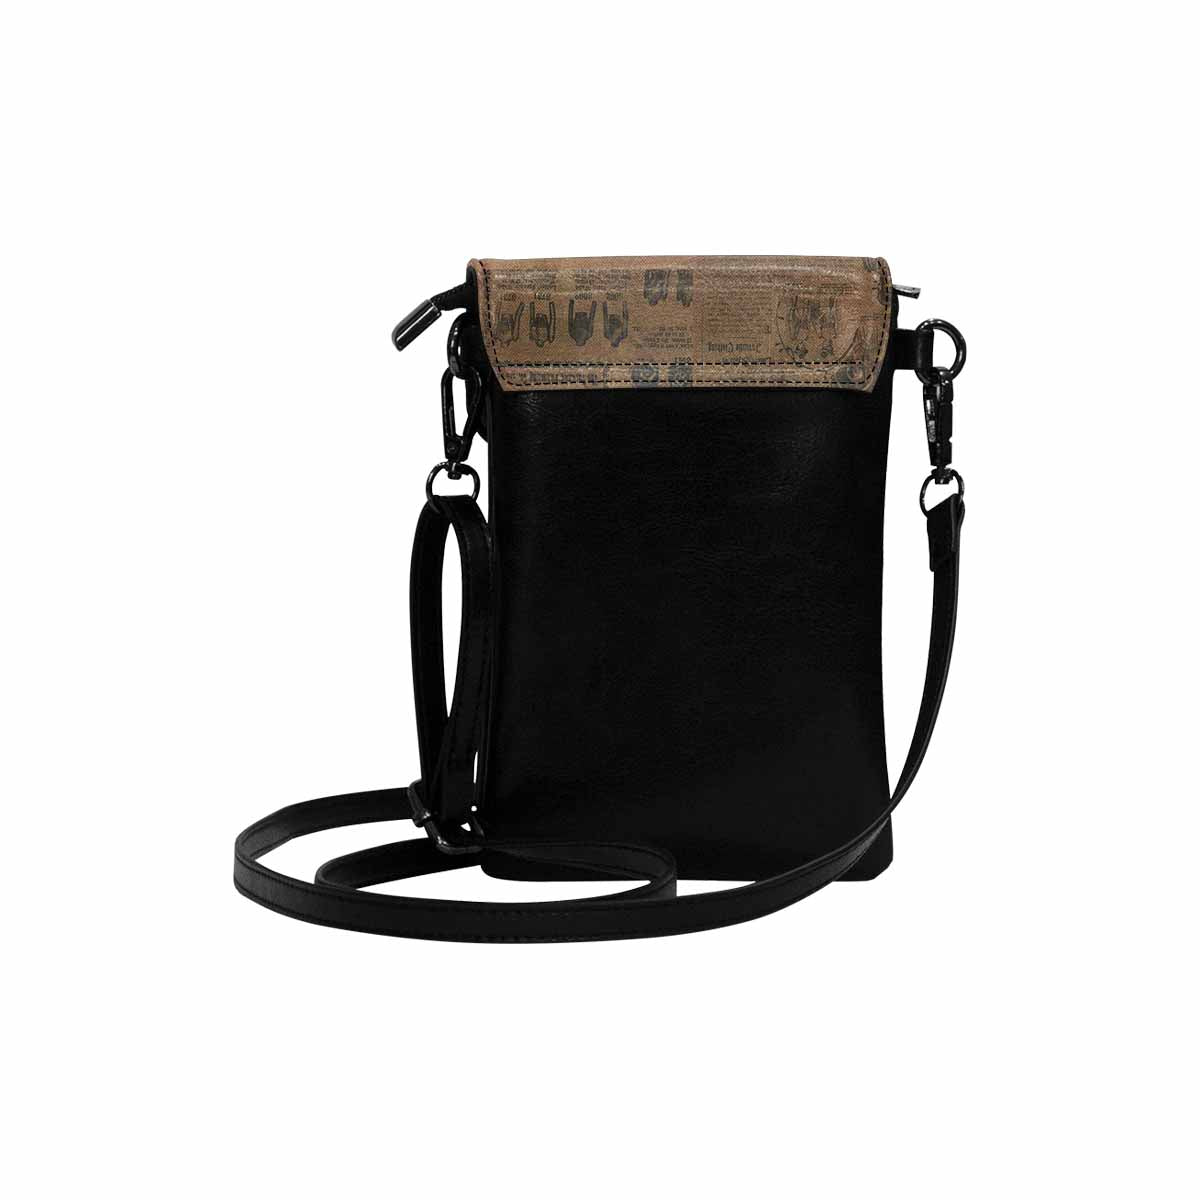 General Victorian cell phone purse, mobile purse, Design 39